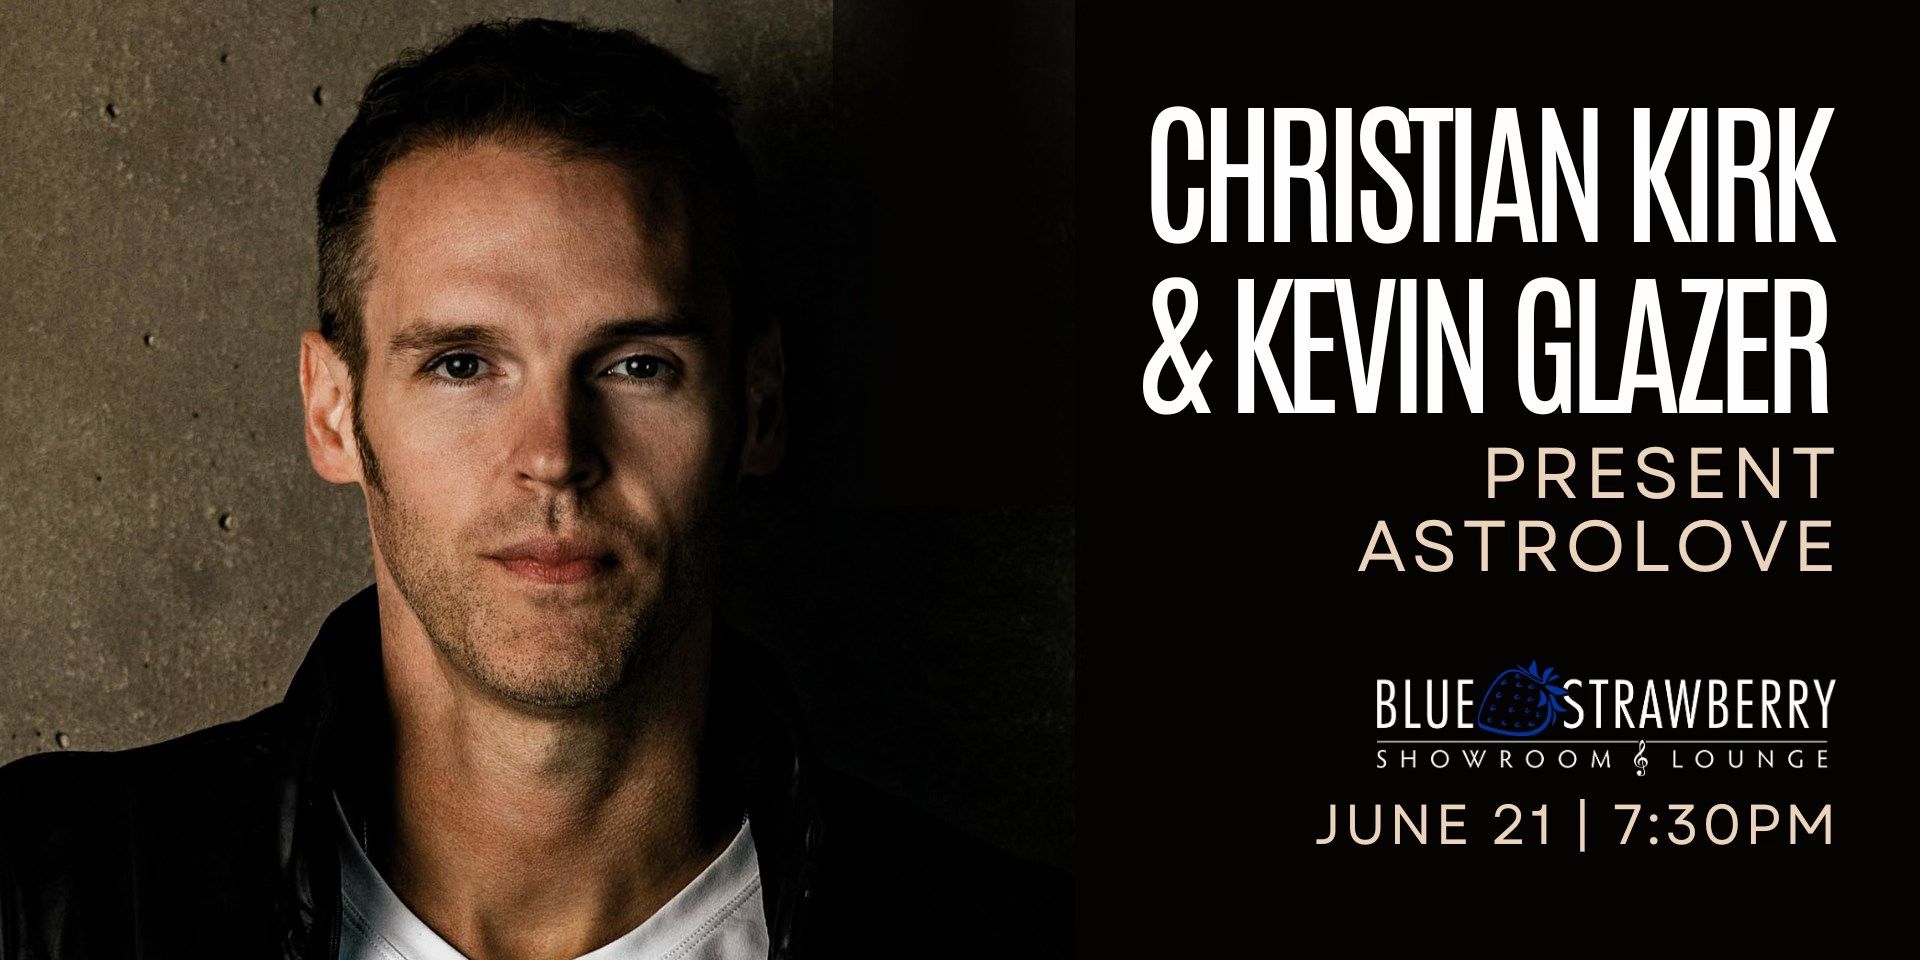 Christian Kirk & Kevin Glazer present ASTROLOVE promotional image